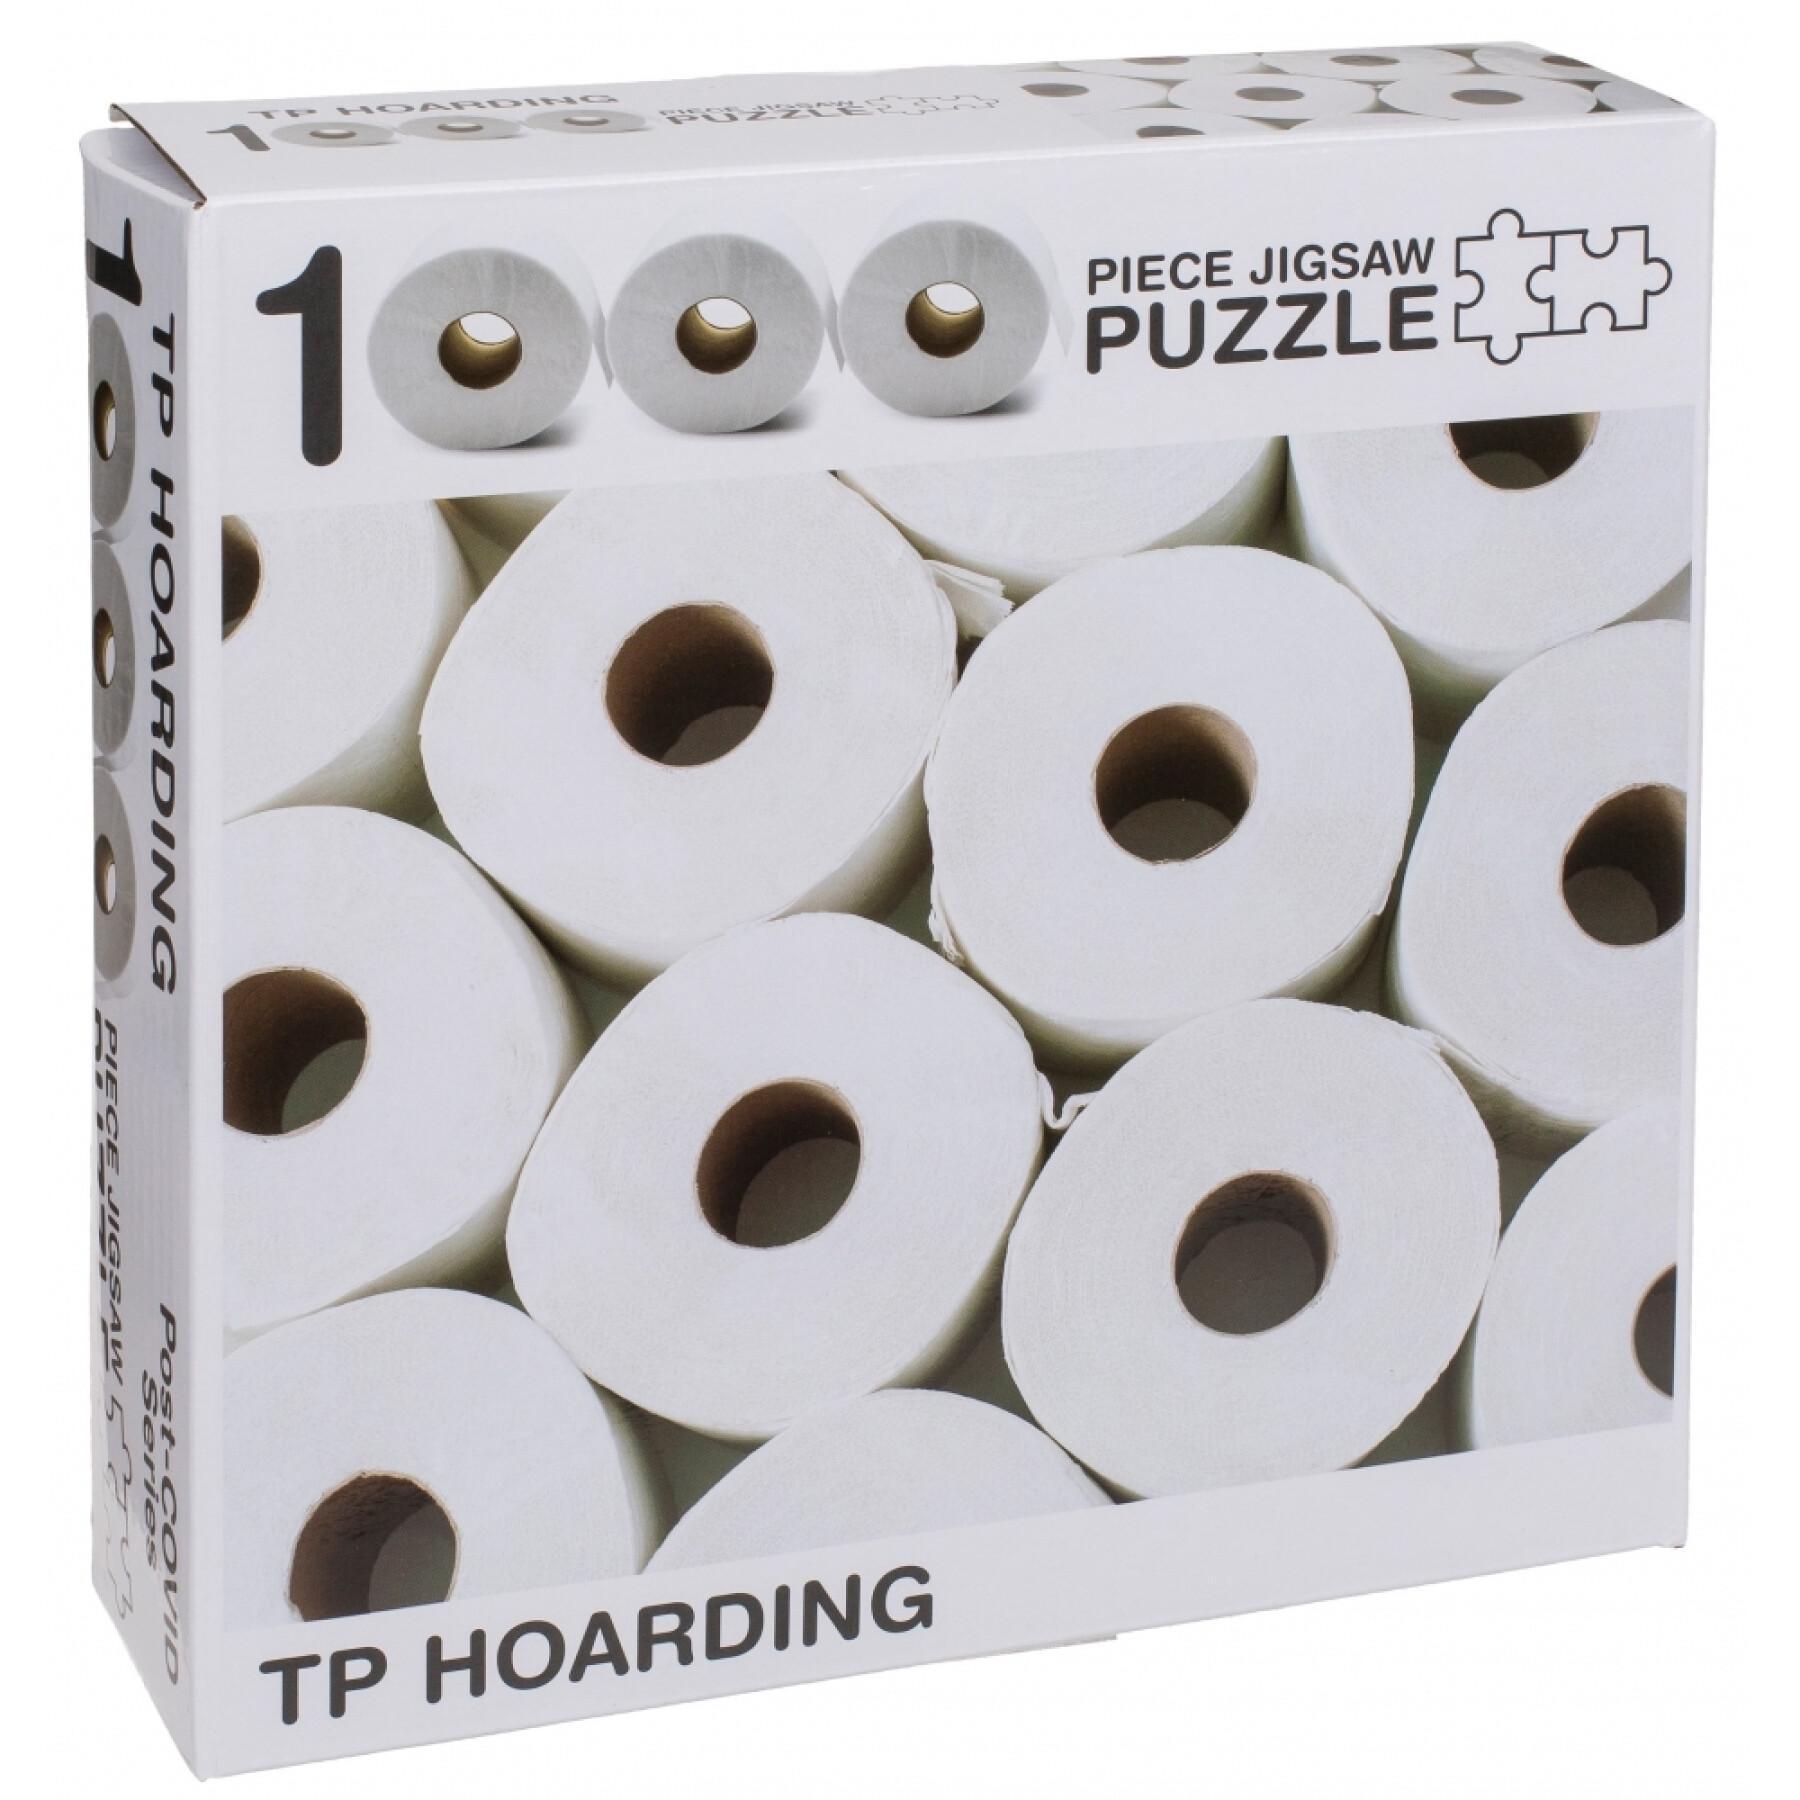 1000 pieces toilet paper rolls puzzle OOTB